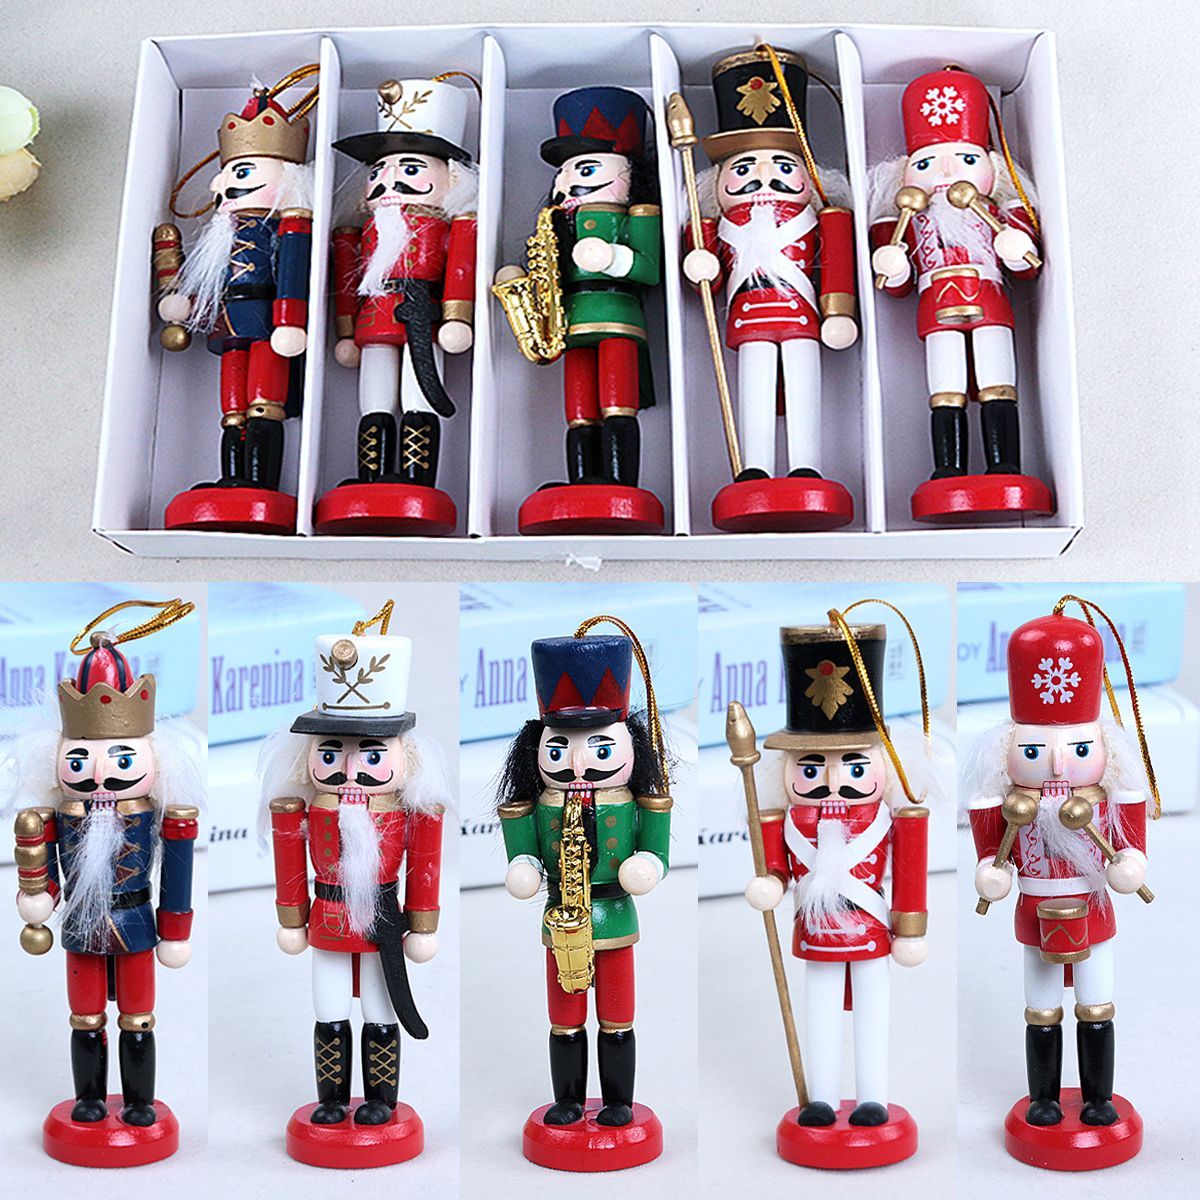 5Pcs-12CM-Wooden-Nutcracker-Soldier-Handcraft-Walnut-Puppet-Christmas-Decorations-Gift-1477039